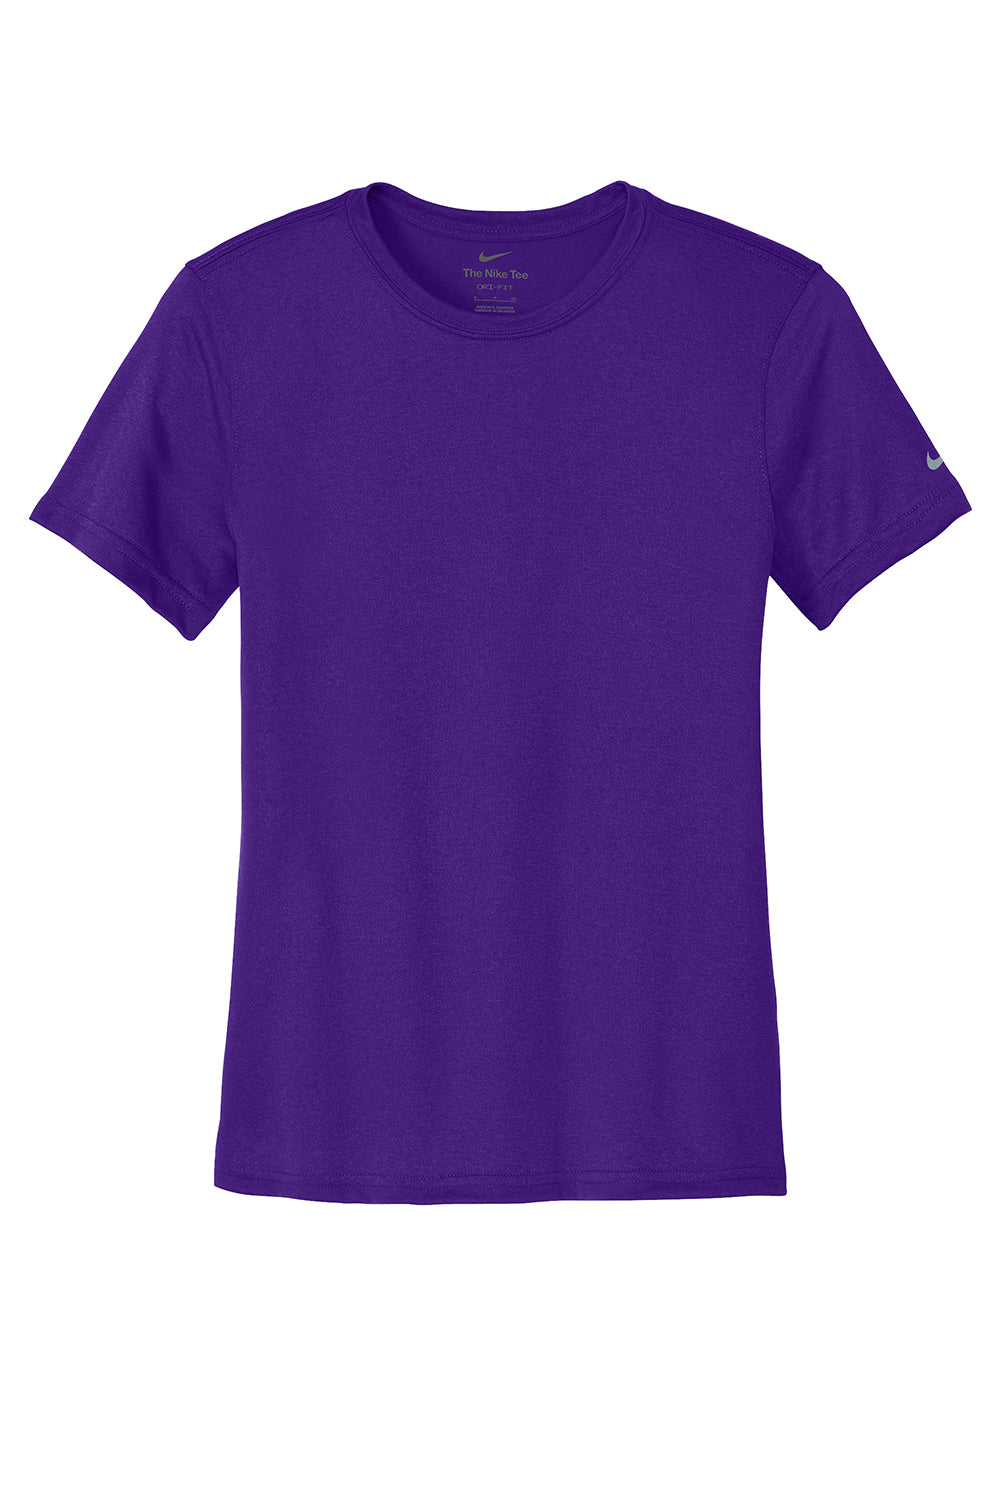 Nike NKDX8734 Womens rLegend Dri-Fit Moisture Wicking Short Sleeve Crewneck T-Shirt Court Purple Flat Front